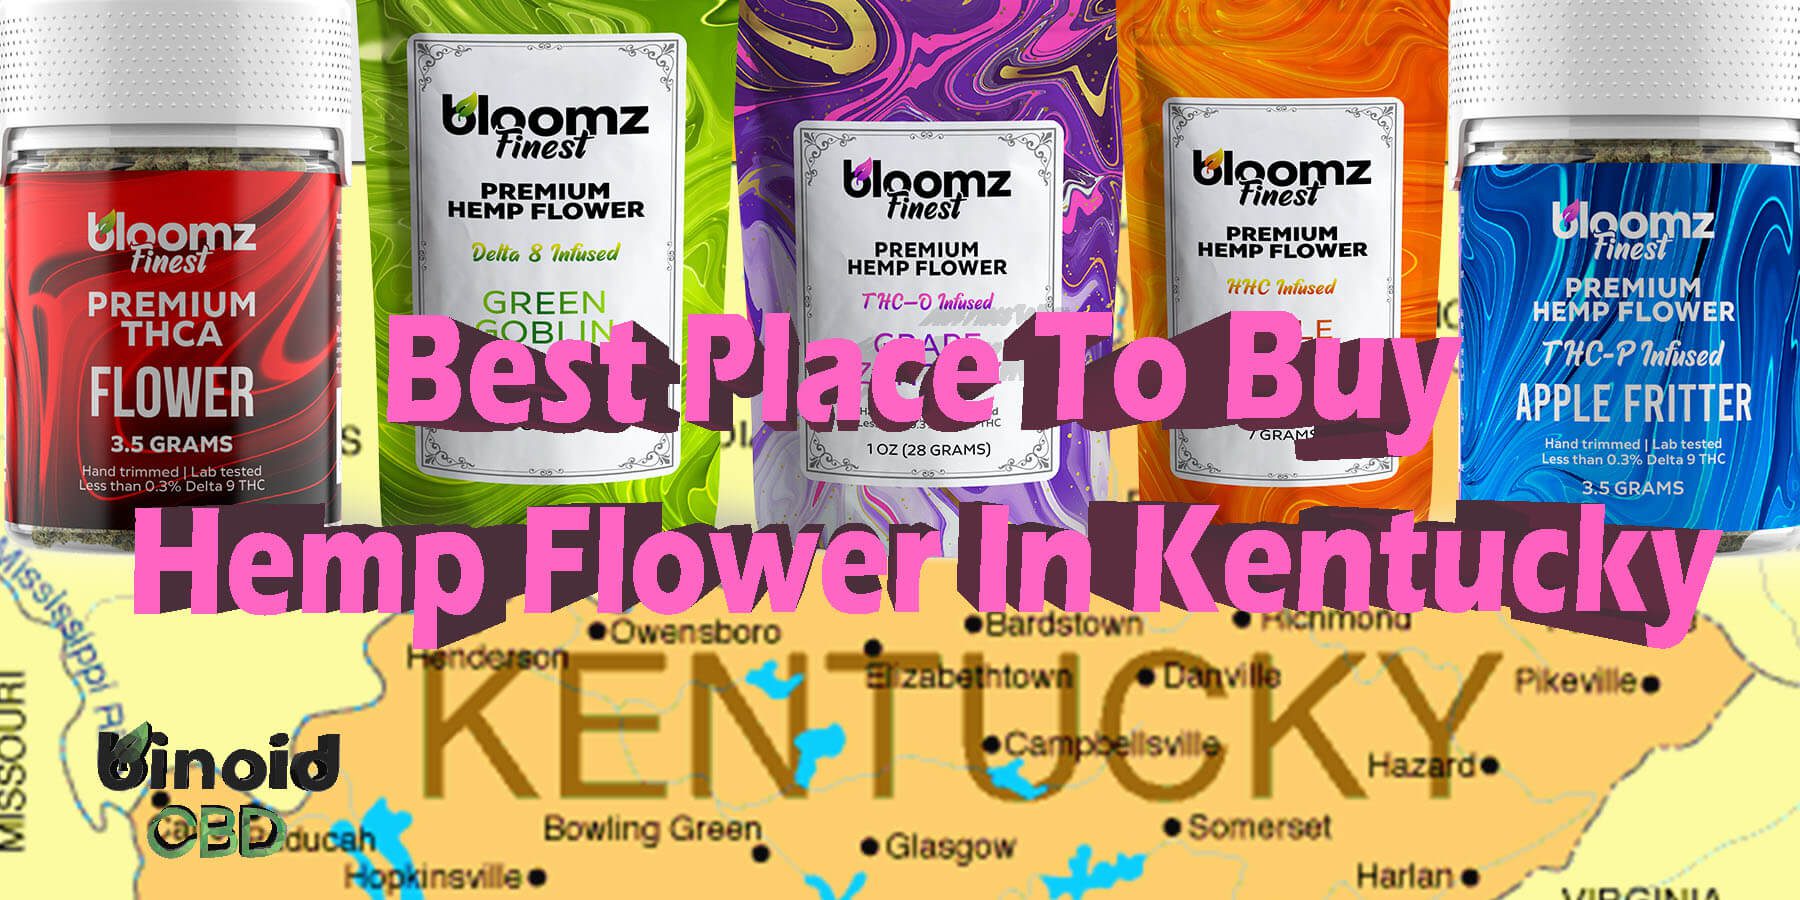 Buy Hemp Flower Kentucky Rolls Get Online Near Me For Sale Best Brand Strongest Real Legal Store Shop Reddit